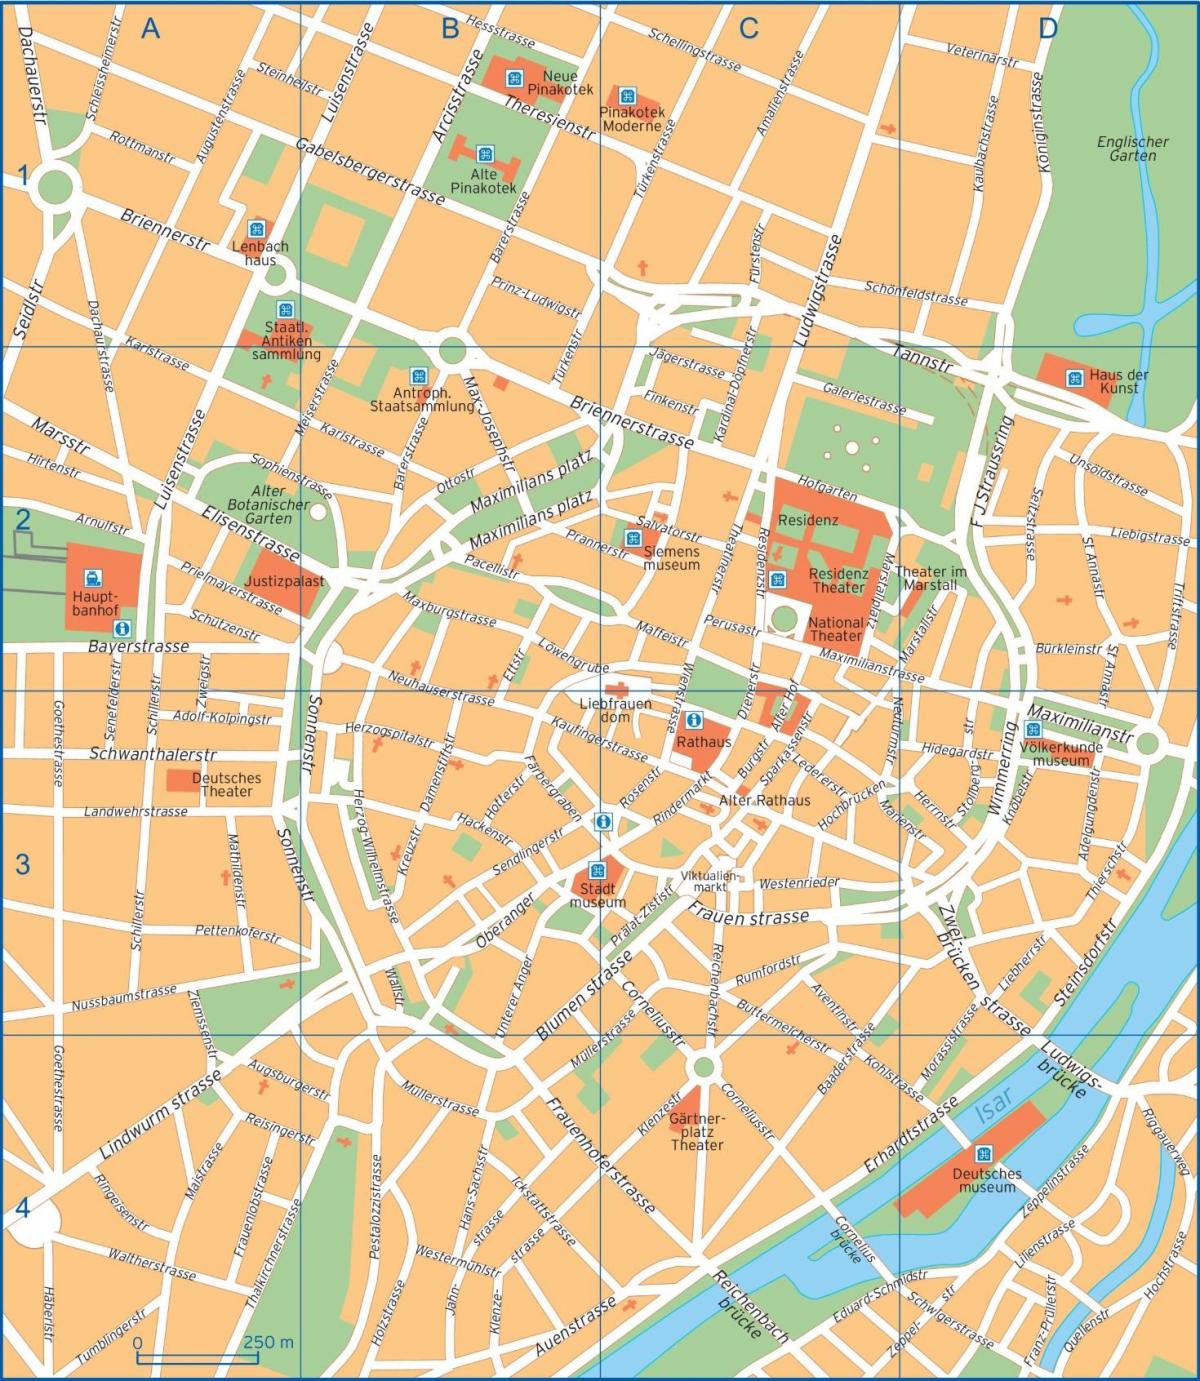 street kart over münchen, tyskland